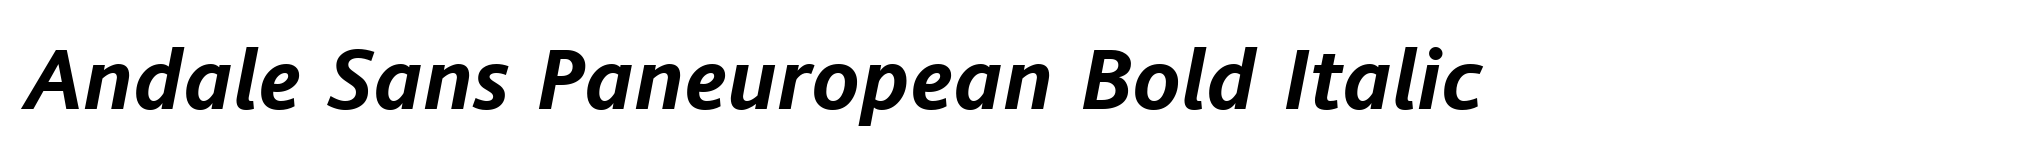 Andale Sans Paneuropean Bold Italic image